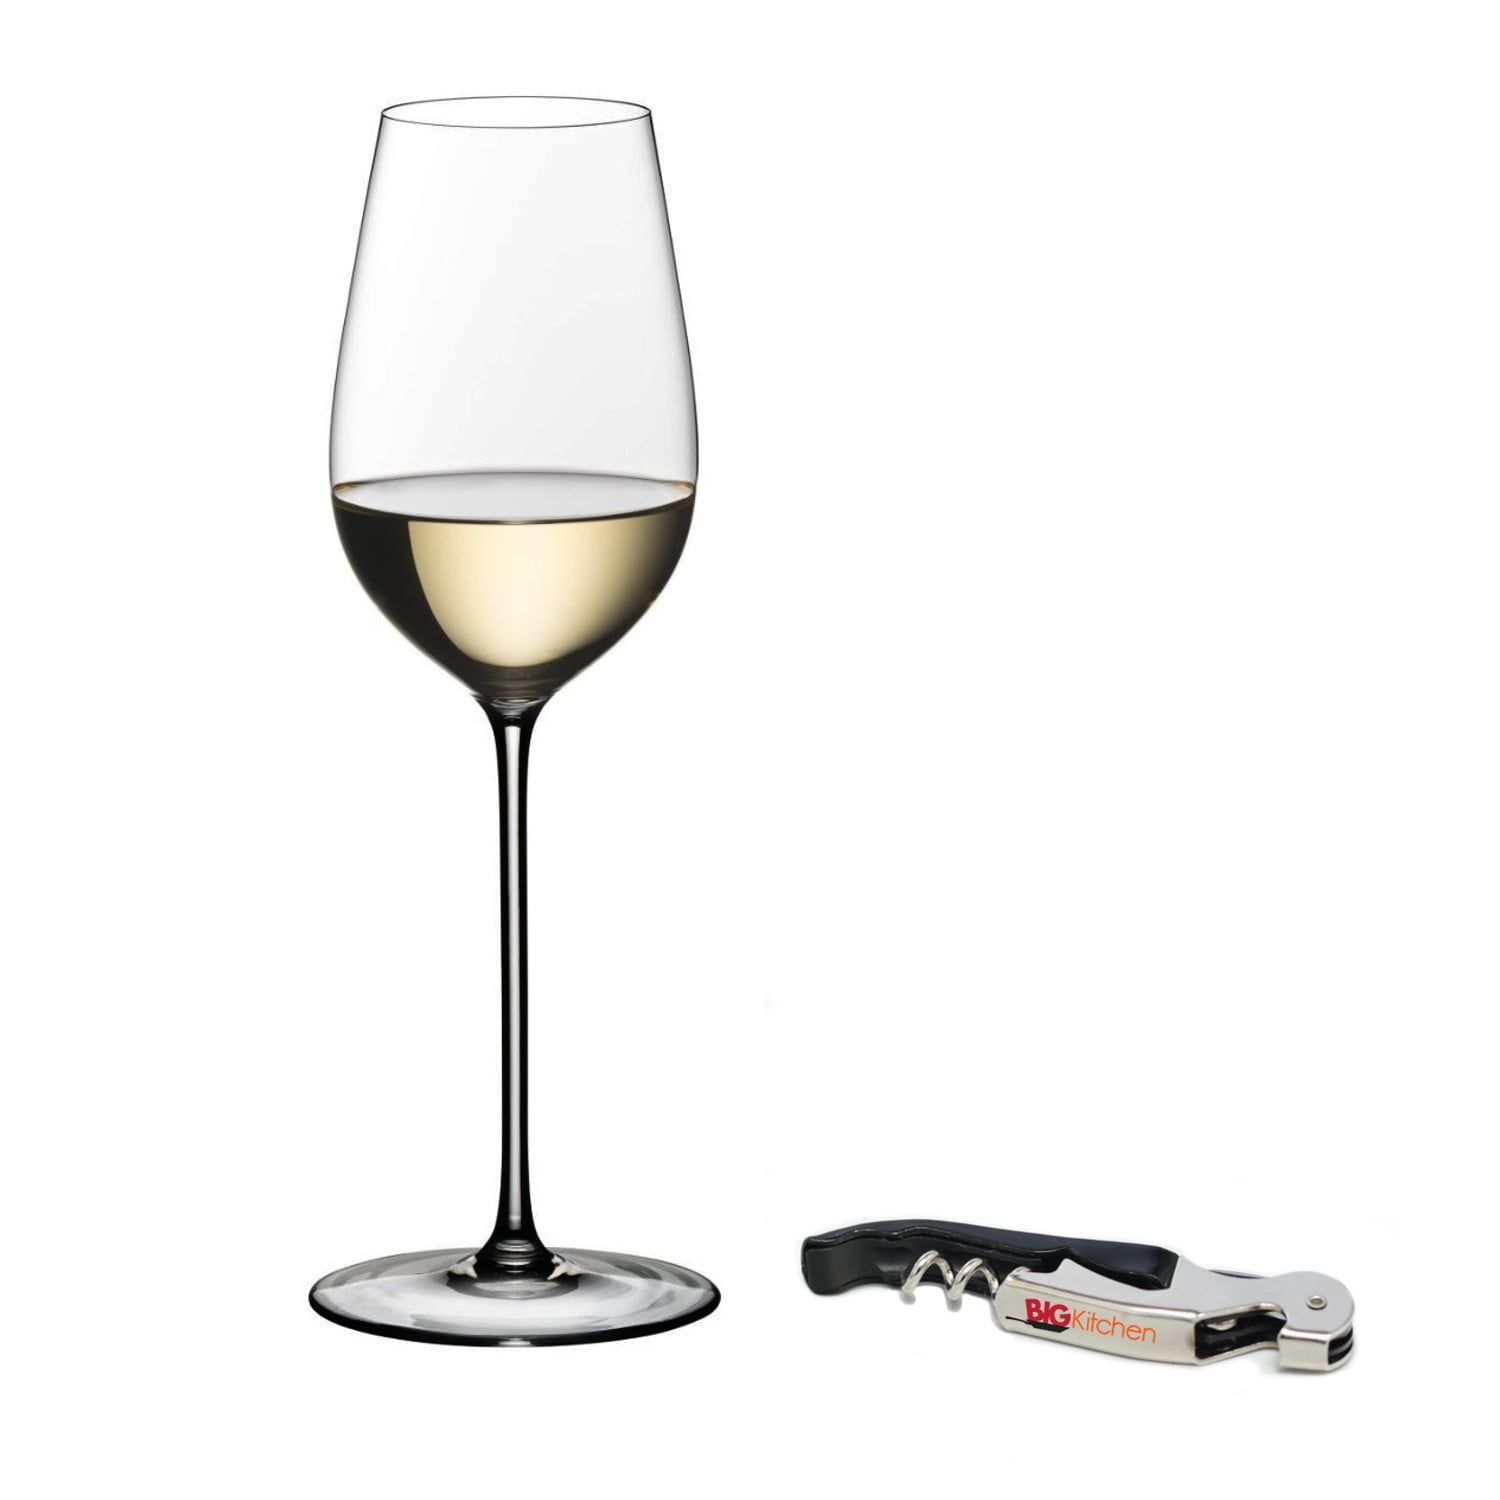 Riedel Superleggero 13.8 Ounce Riesling/Zinfandel Wine Glass with Bonus BigKitchen Waiter&amp;#39;s Corkscrew